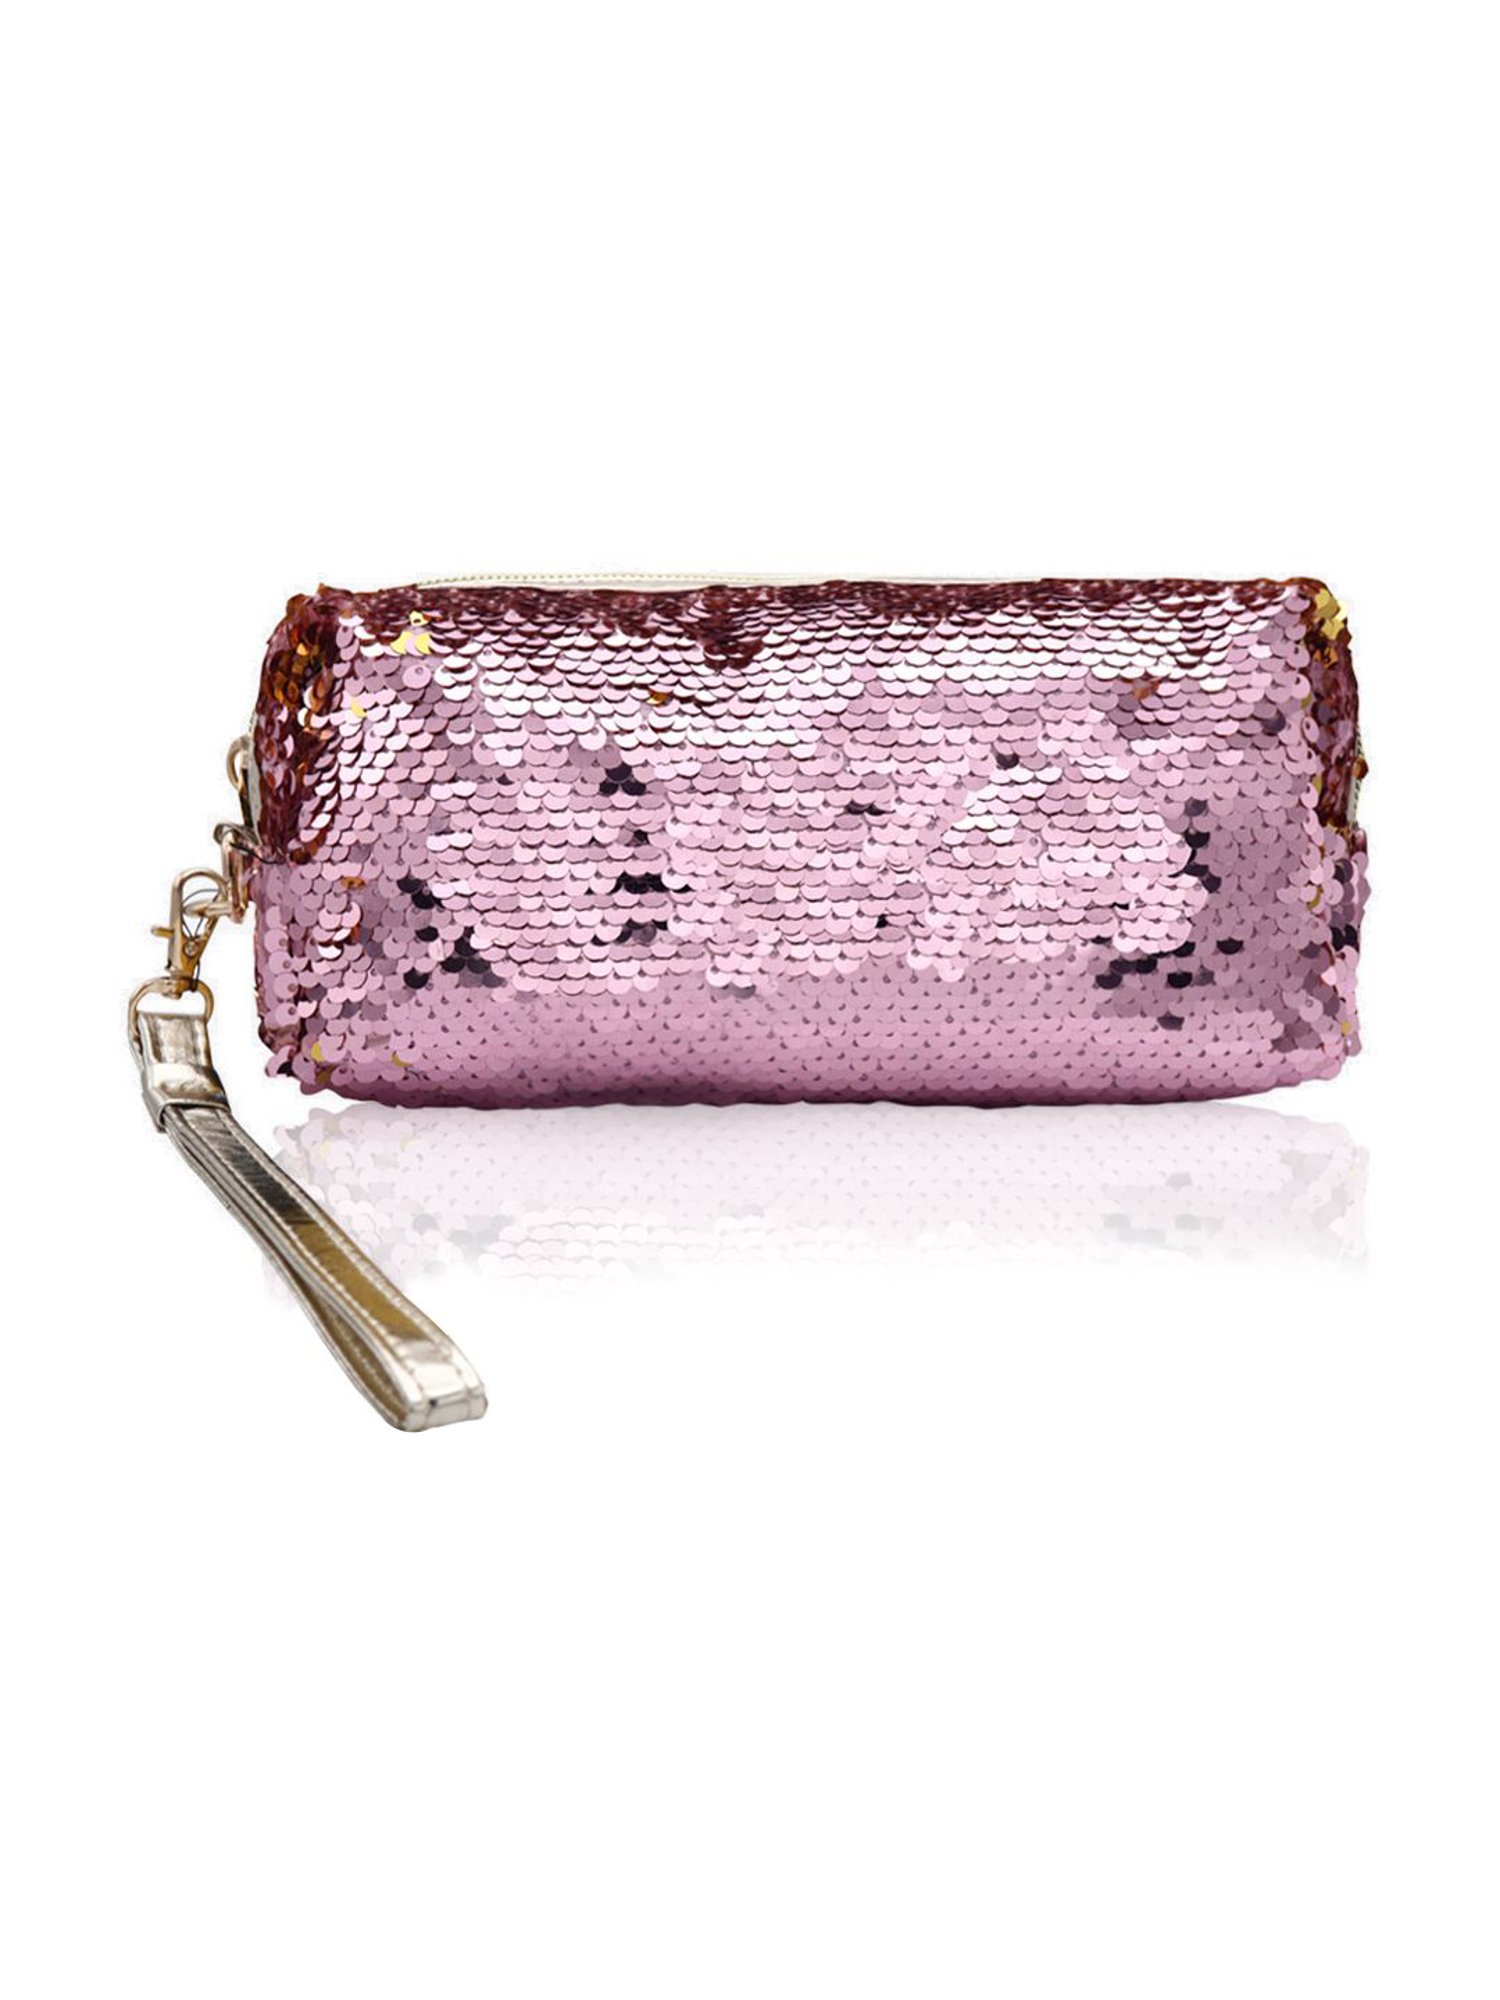 Red Hot mini Sparkling Handbag | Ange Libby